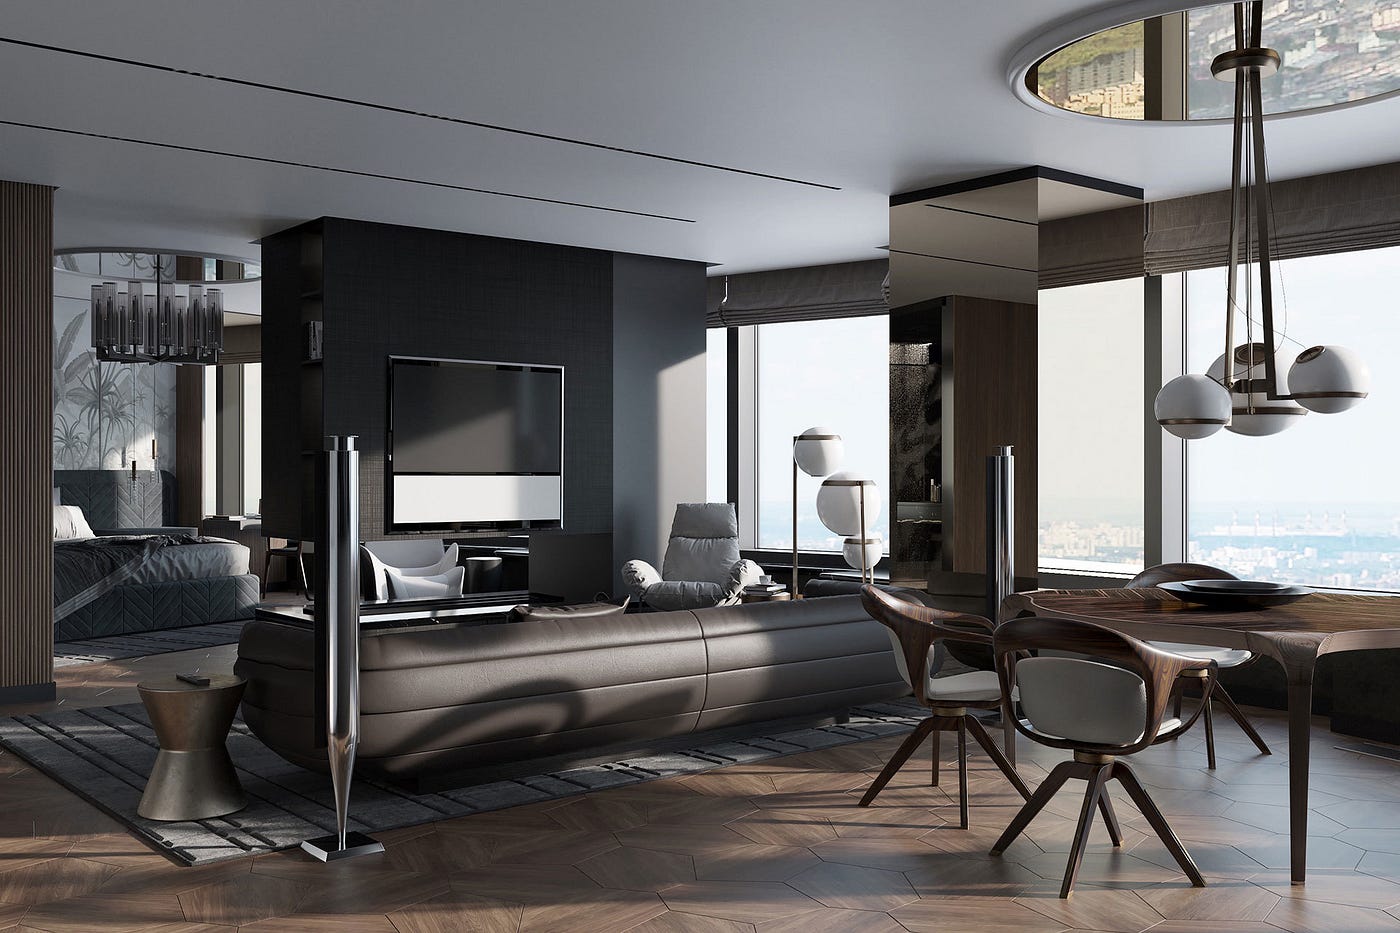 Masculine Meets Modern: 10 Stylish Apartment Decor Ideas for Men